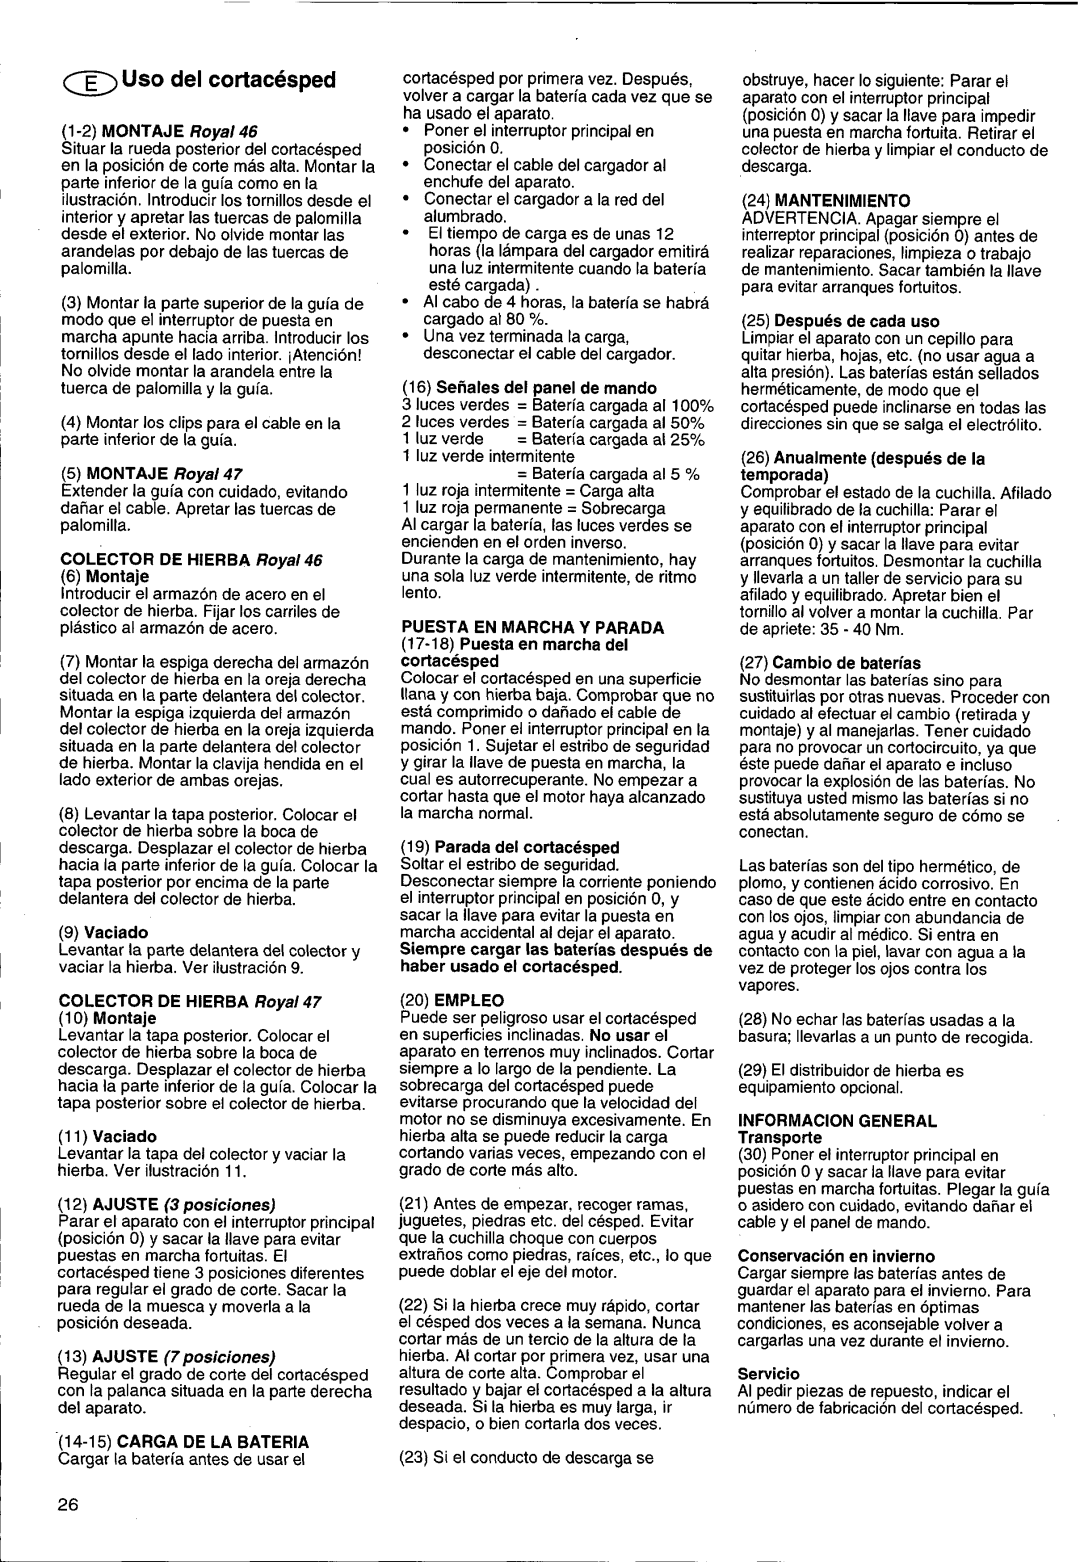 Husqvarna 47RC, 46 RC manual 